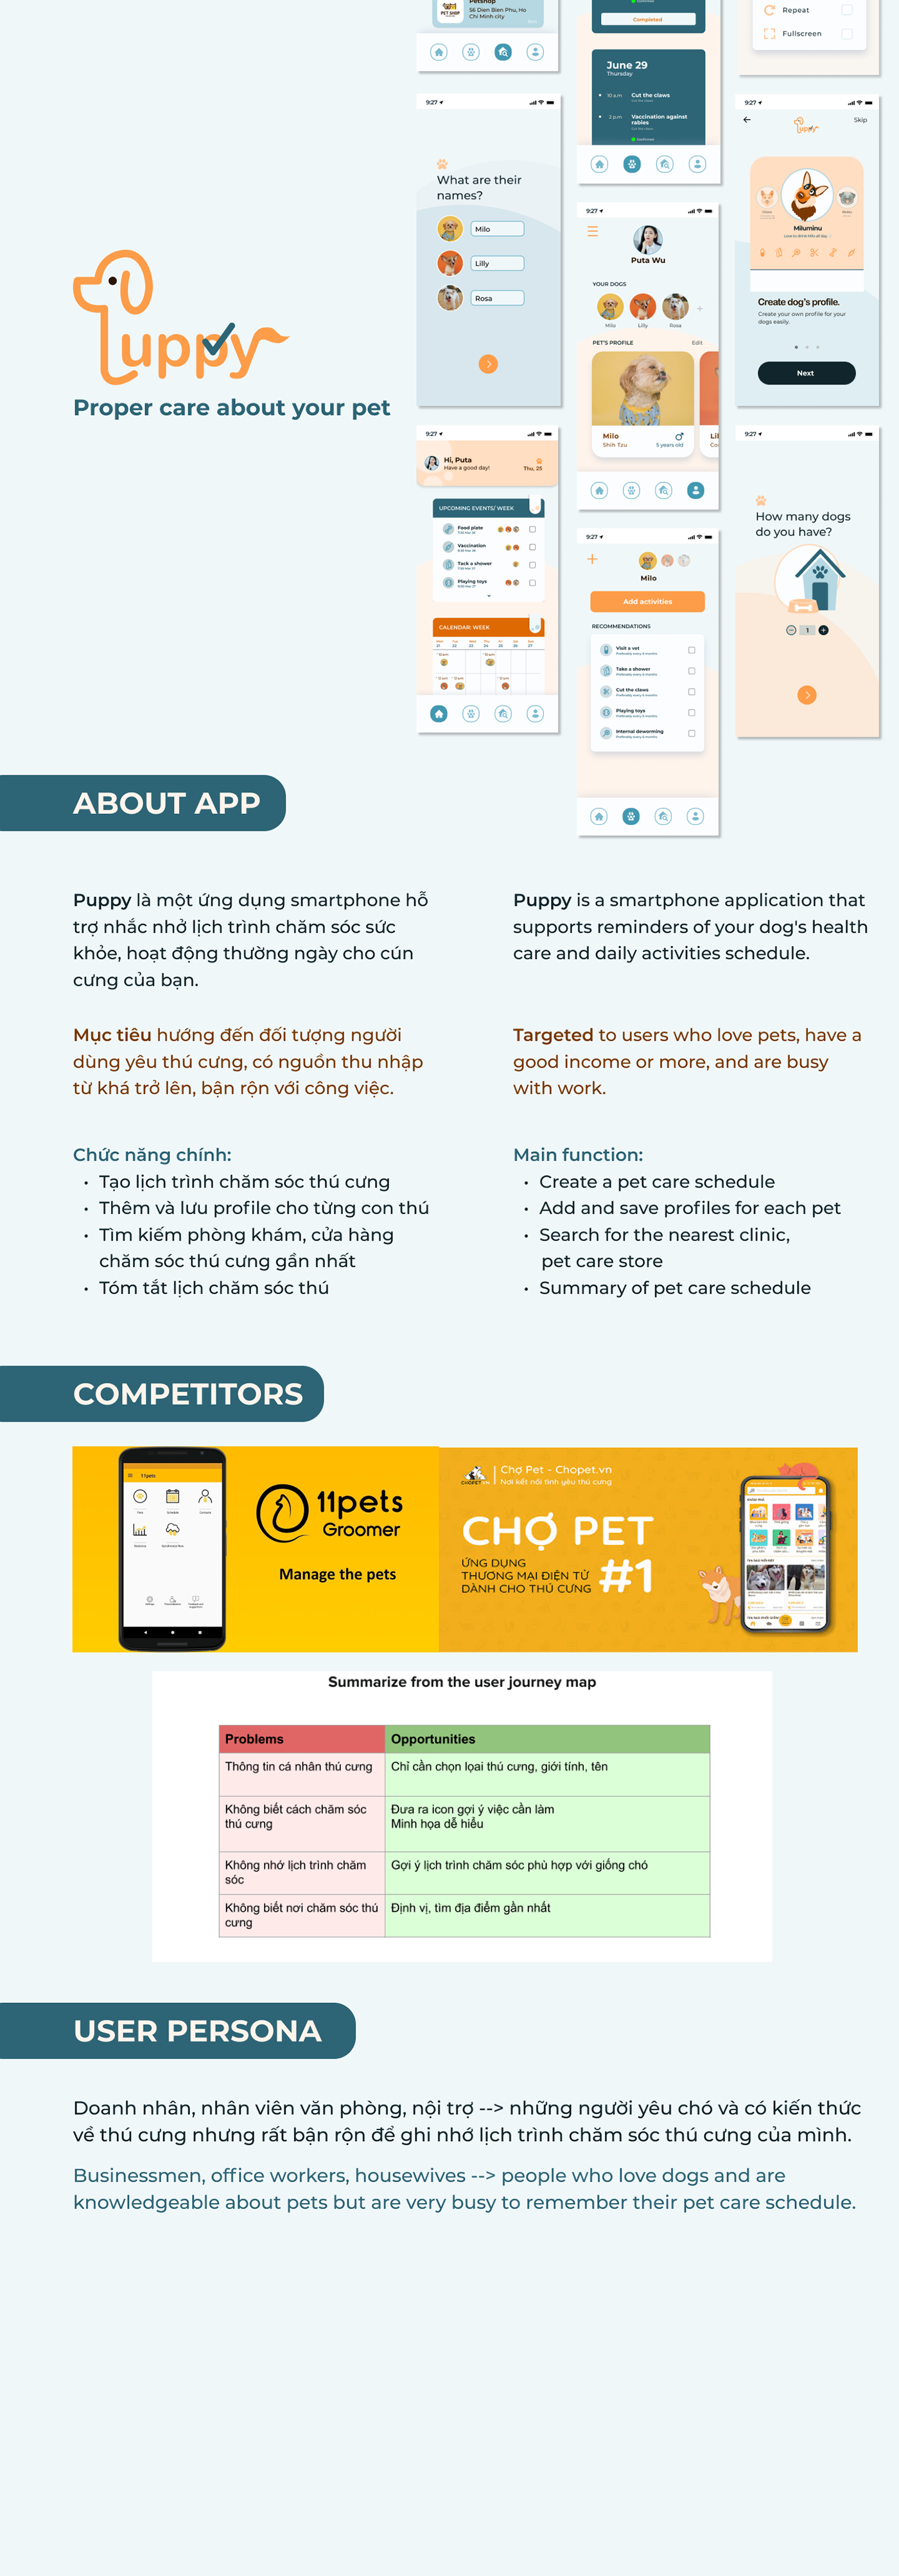 dog lovely Mobile app Pet pet's lover puppy schedule UI/UX Design